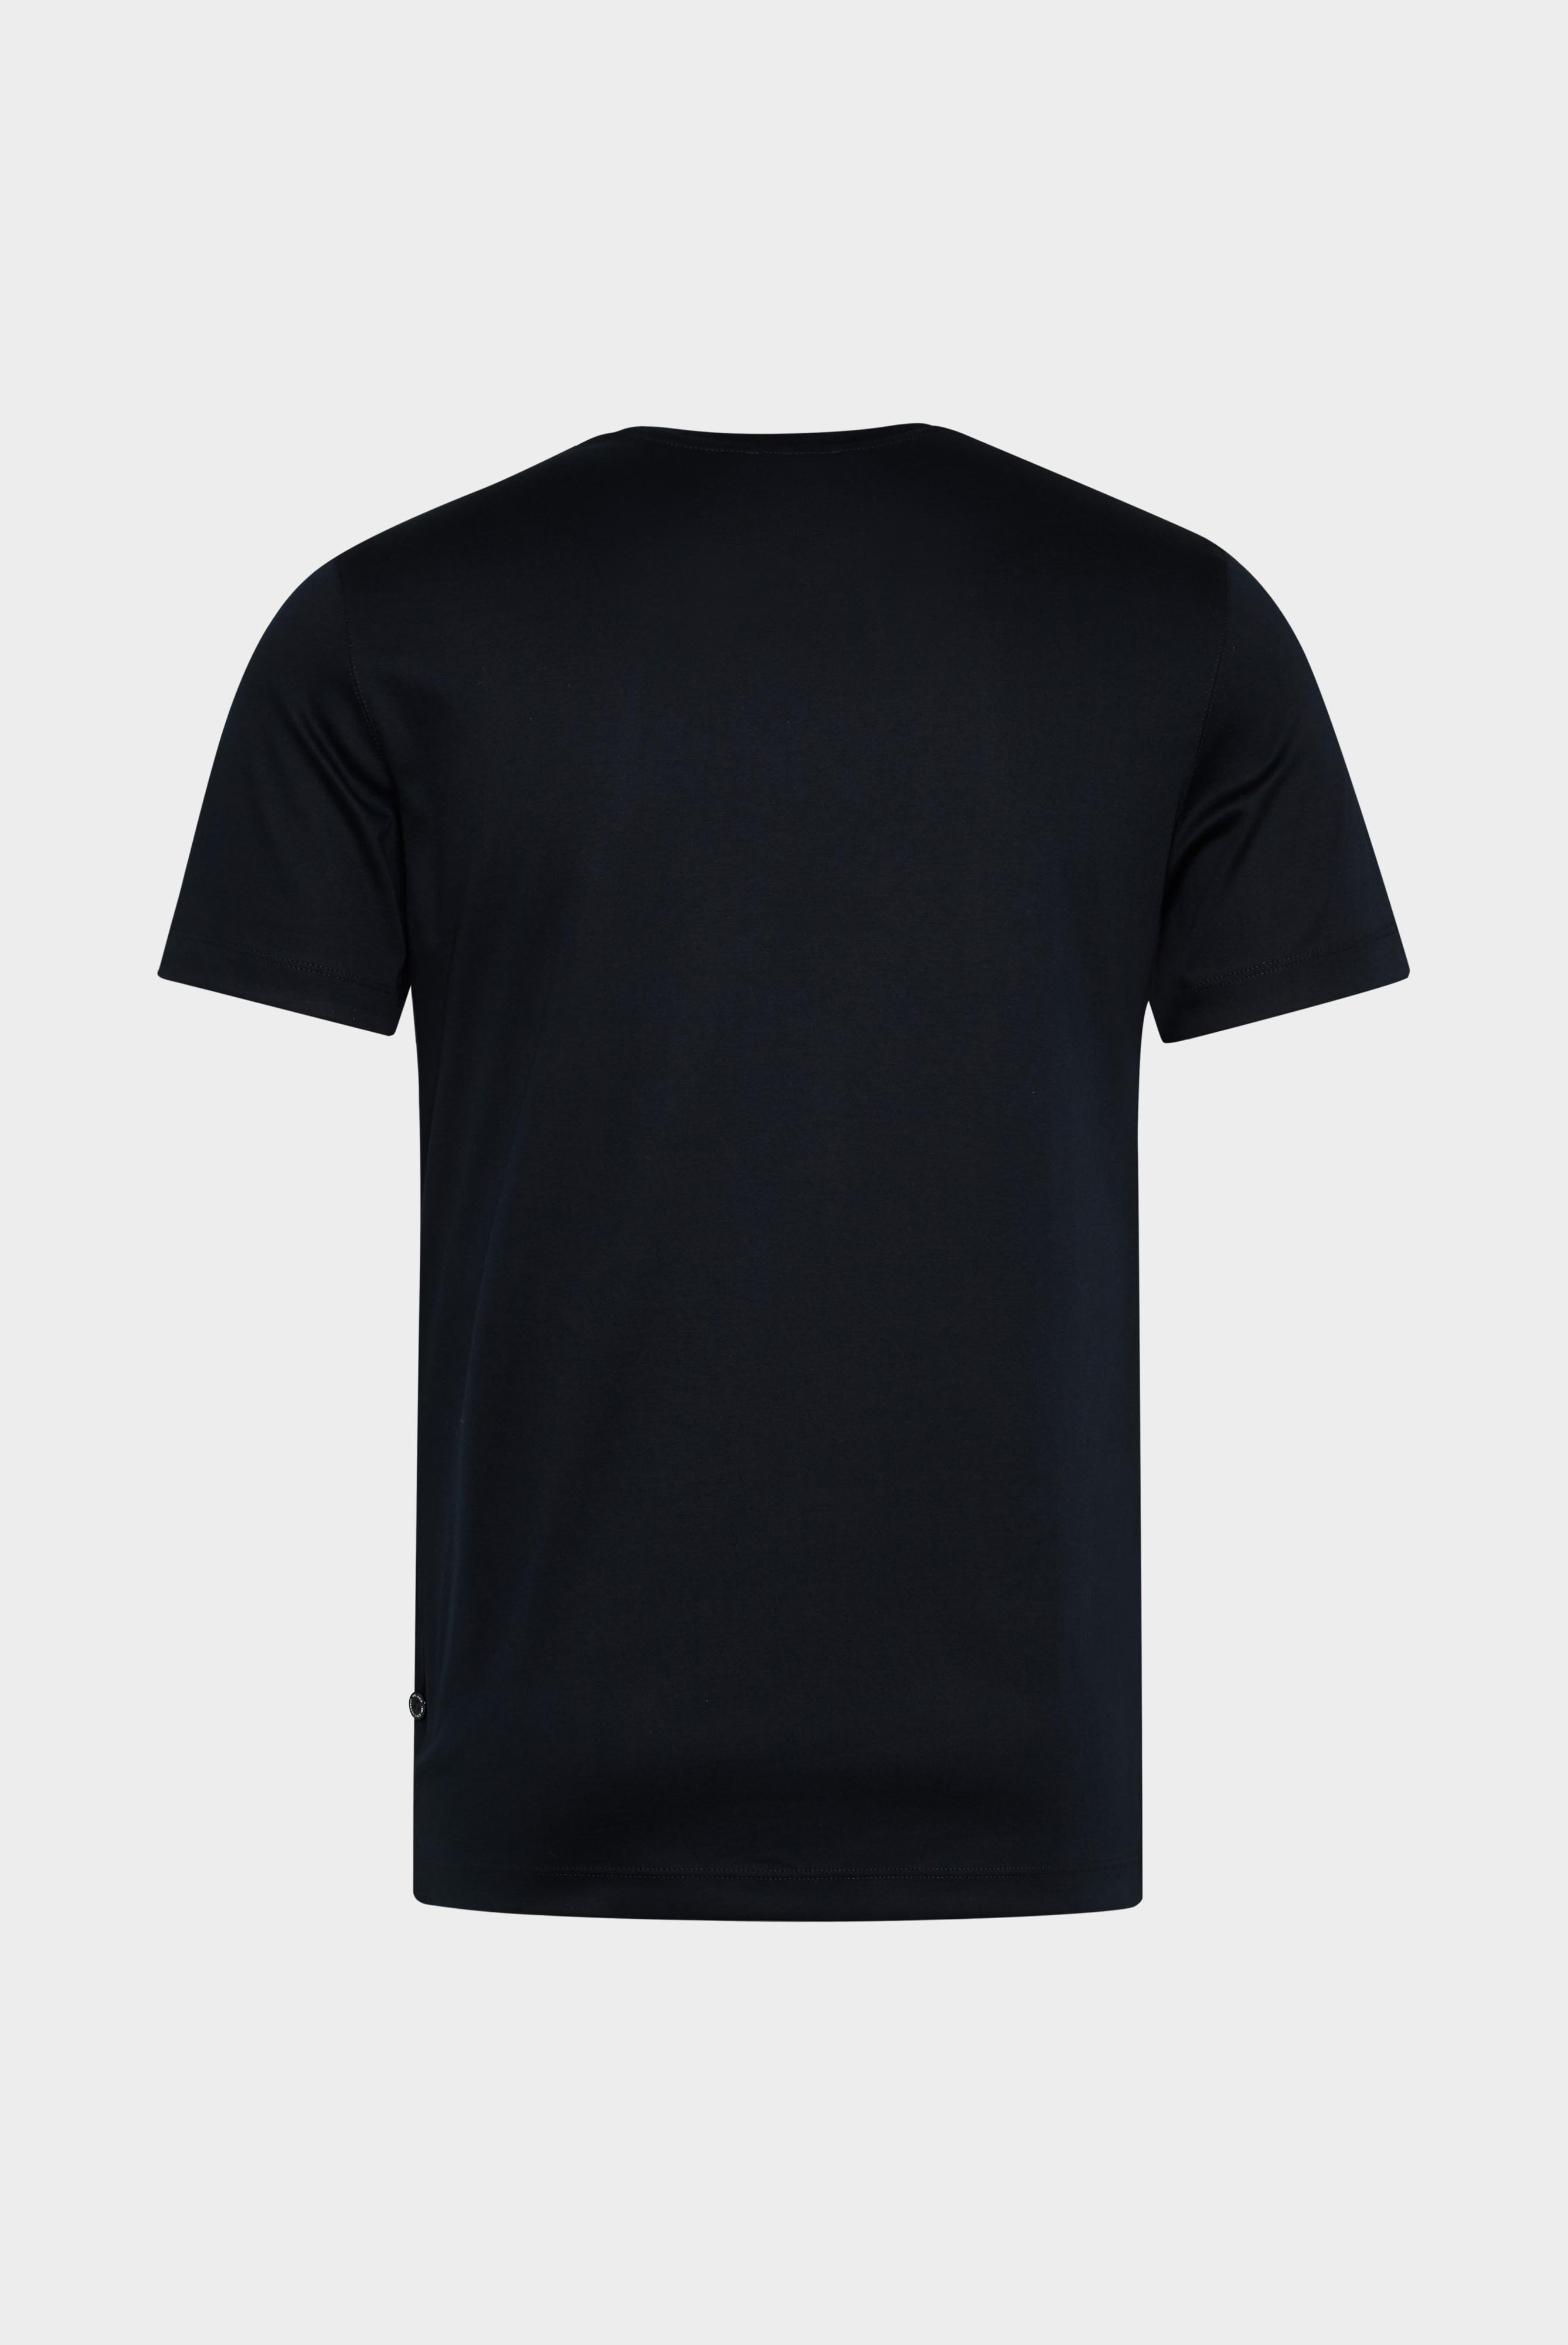 T-Shirts+Swiss Cotton Jersey V-Neck T-Shirt+20.1715.UX.180031.790.M